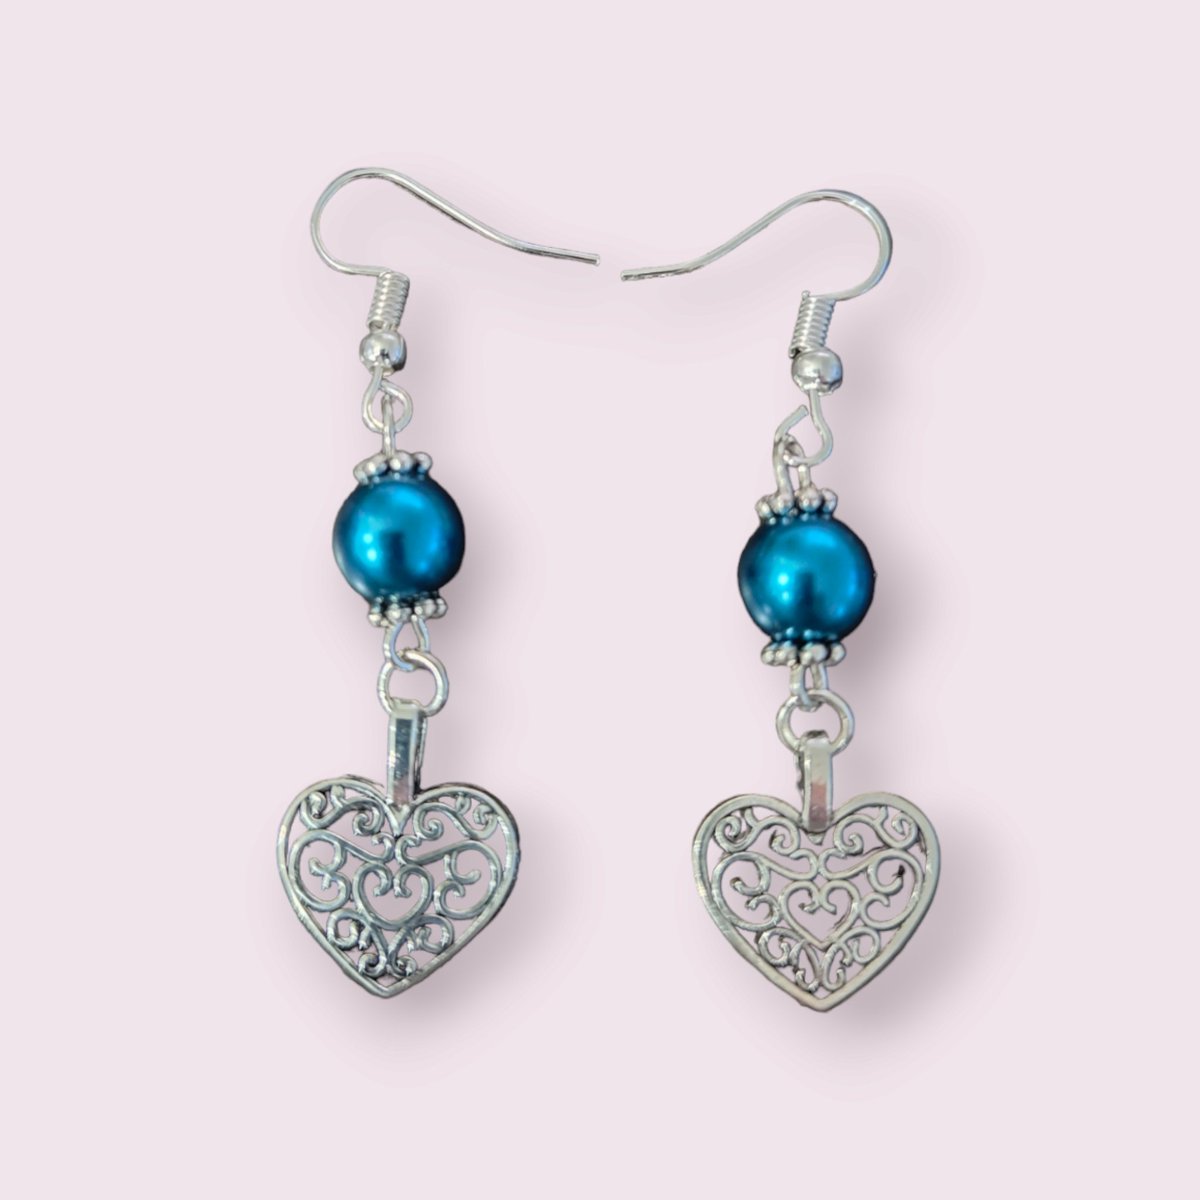 🚨 NEW EARRINGS 🚨

RED OR BLUE? 

Order now! 👇
zeespiecesshop.etsy.com/listing/171010…

#etsy #earrings #giftforher